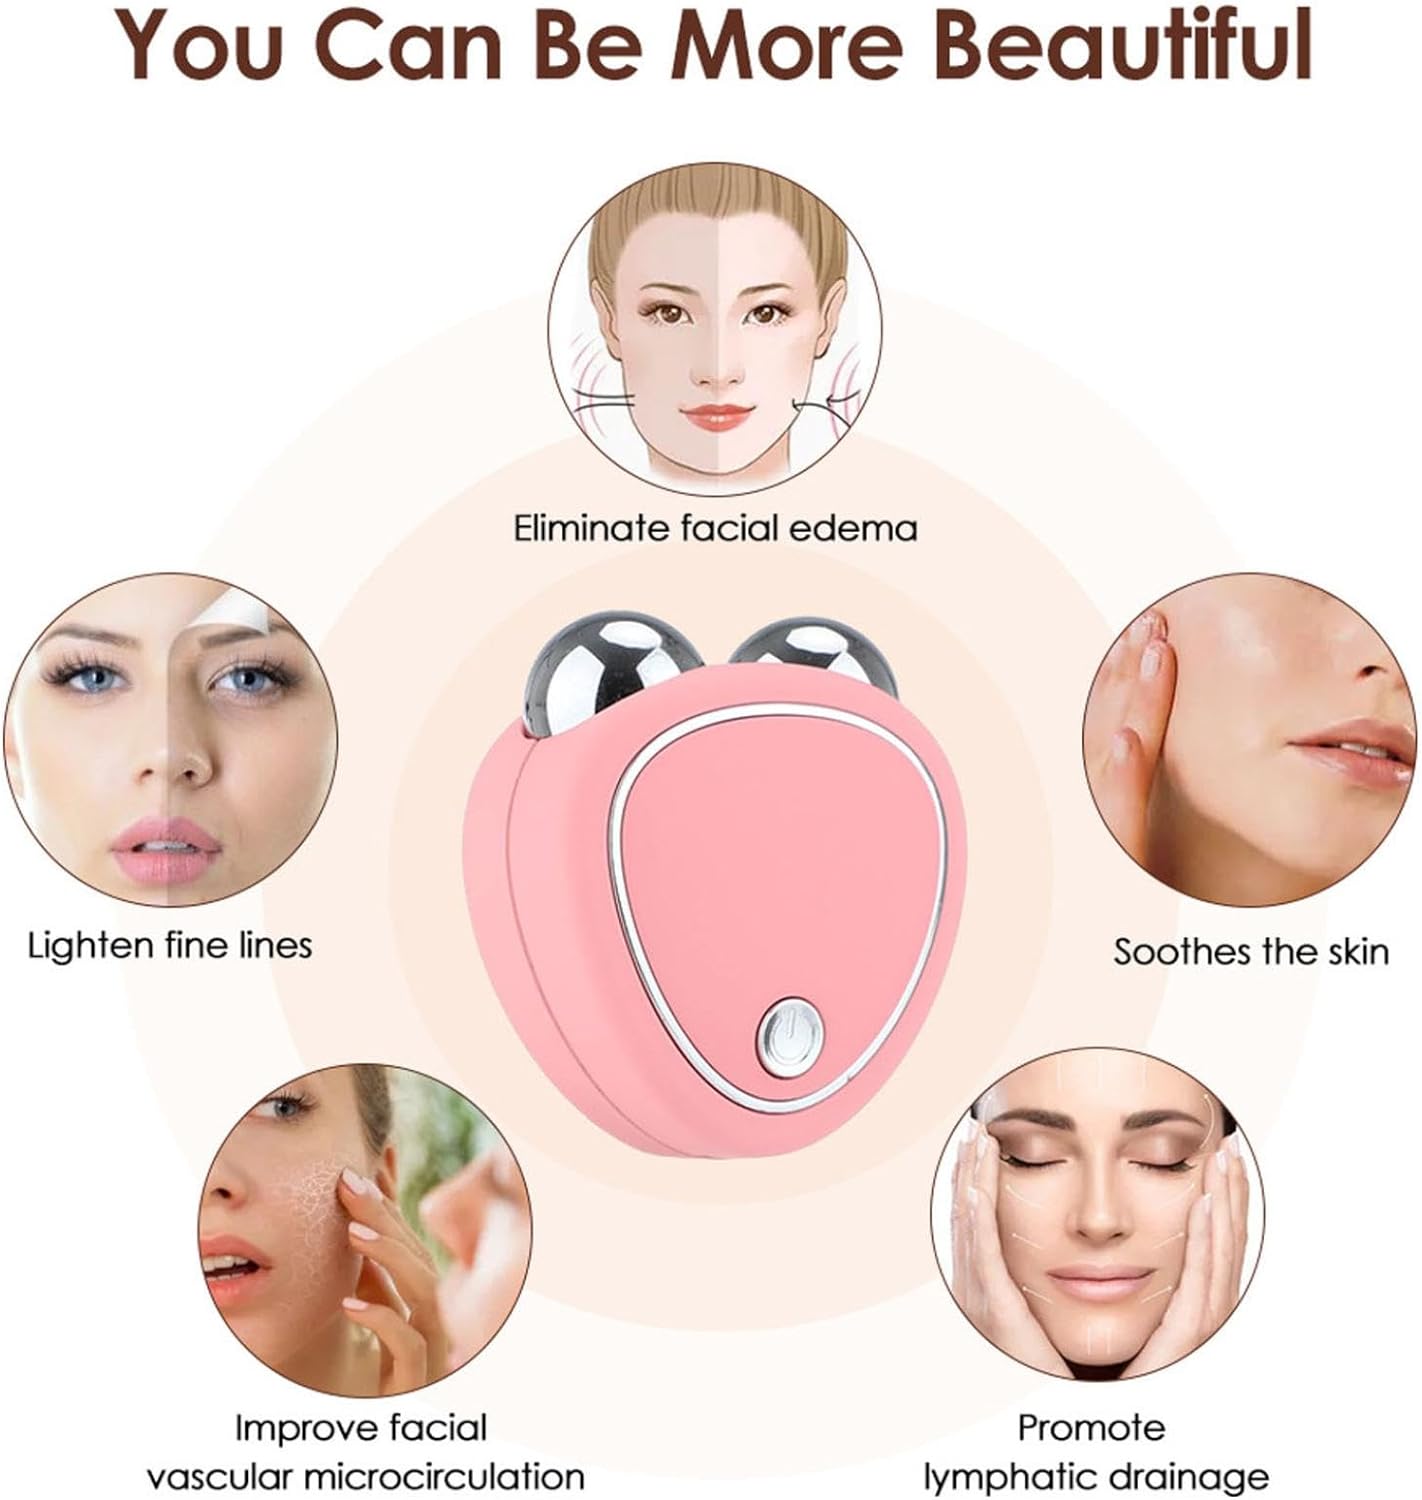 EMS Facial Massager Microcurrent Face Lifting Machine Rejuvenation